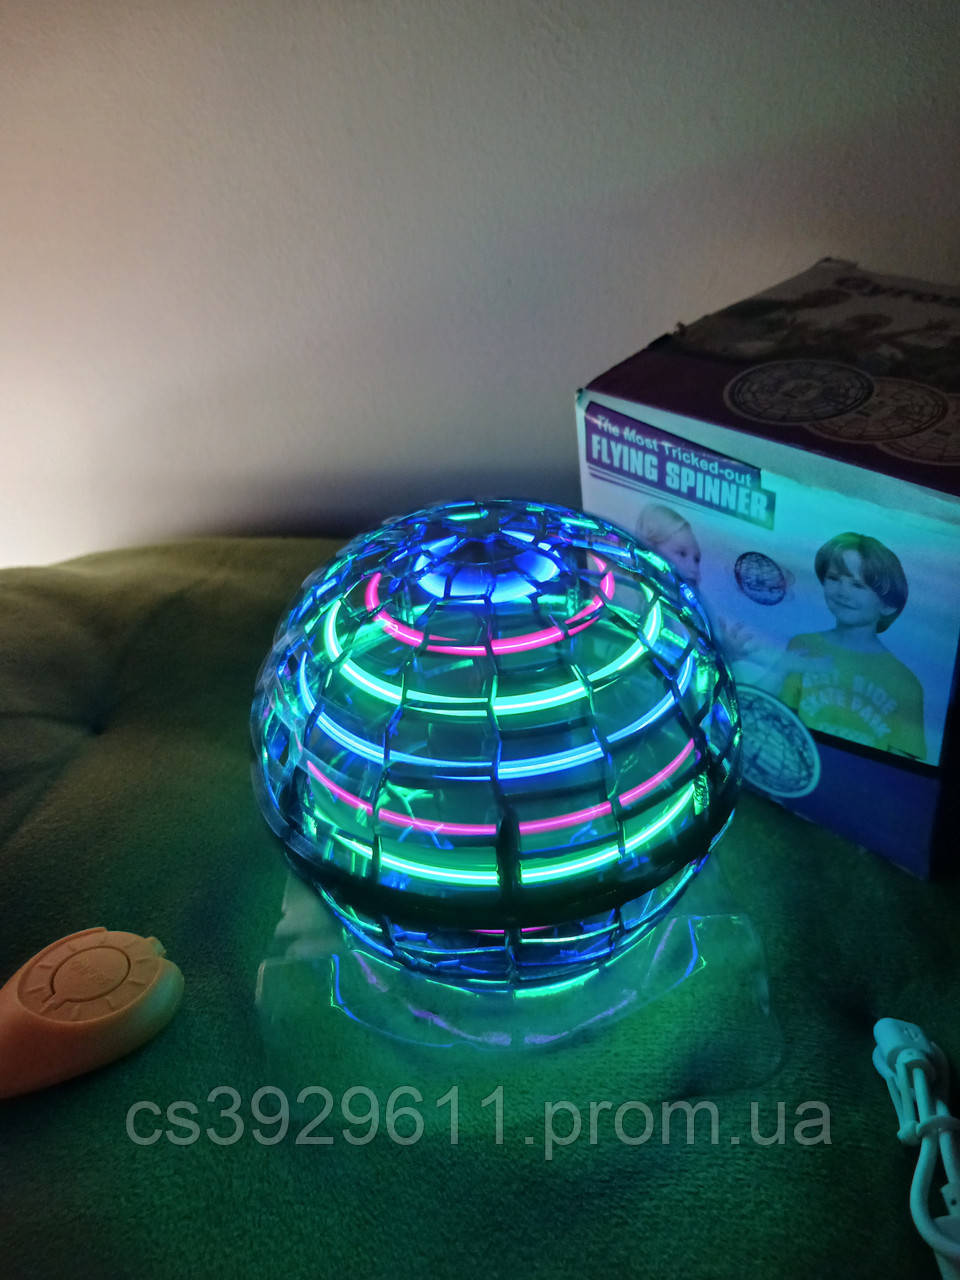 Літаюча куля, що світиться, бумеранг для дітей Flynova pro Gyrosphere, Літальна куля спінер? Flying spinner ball